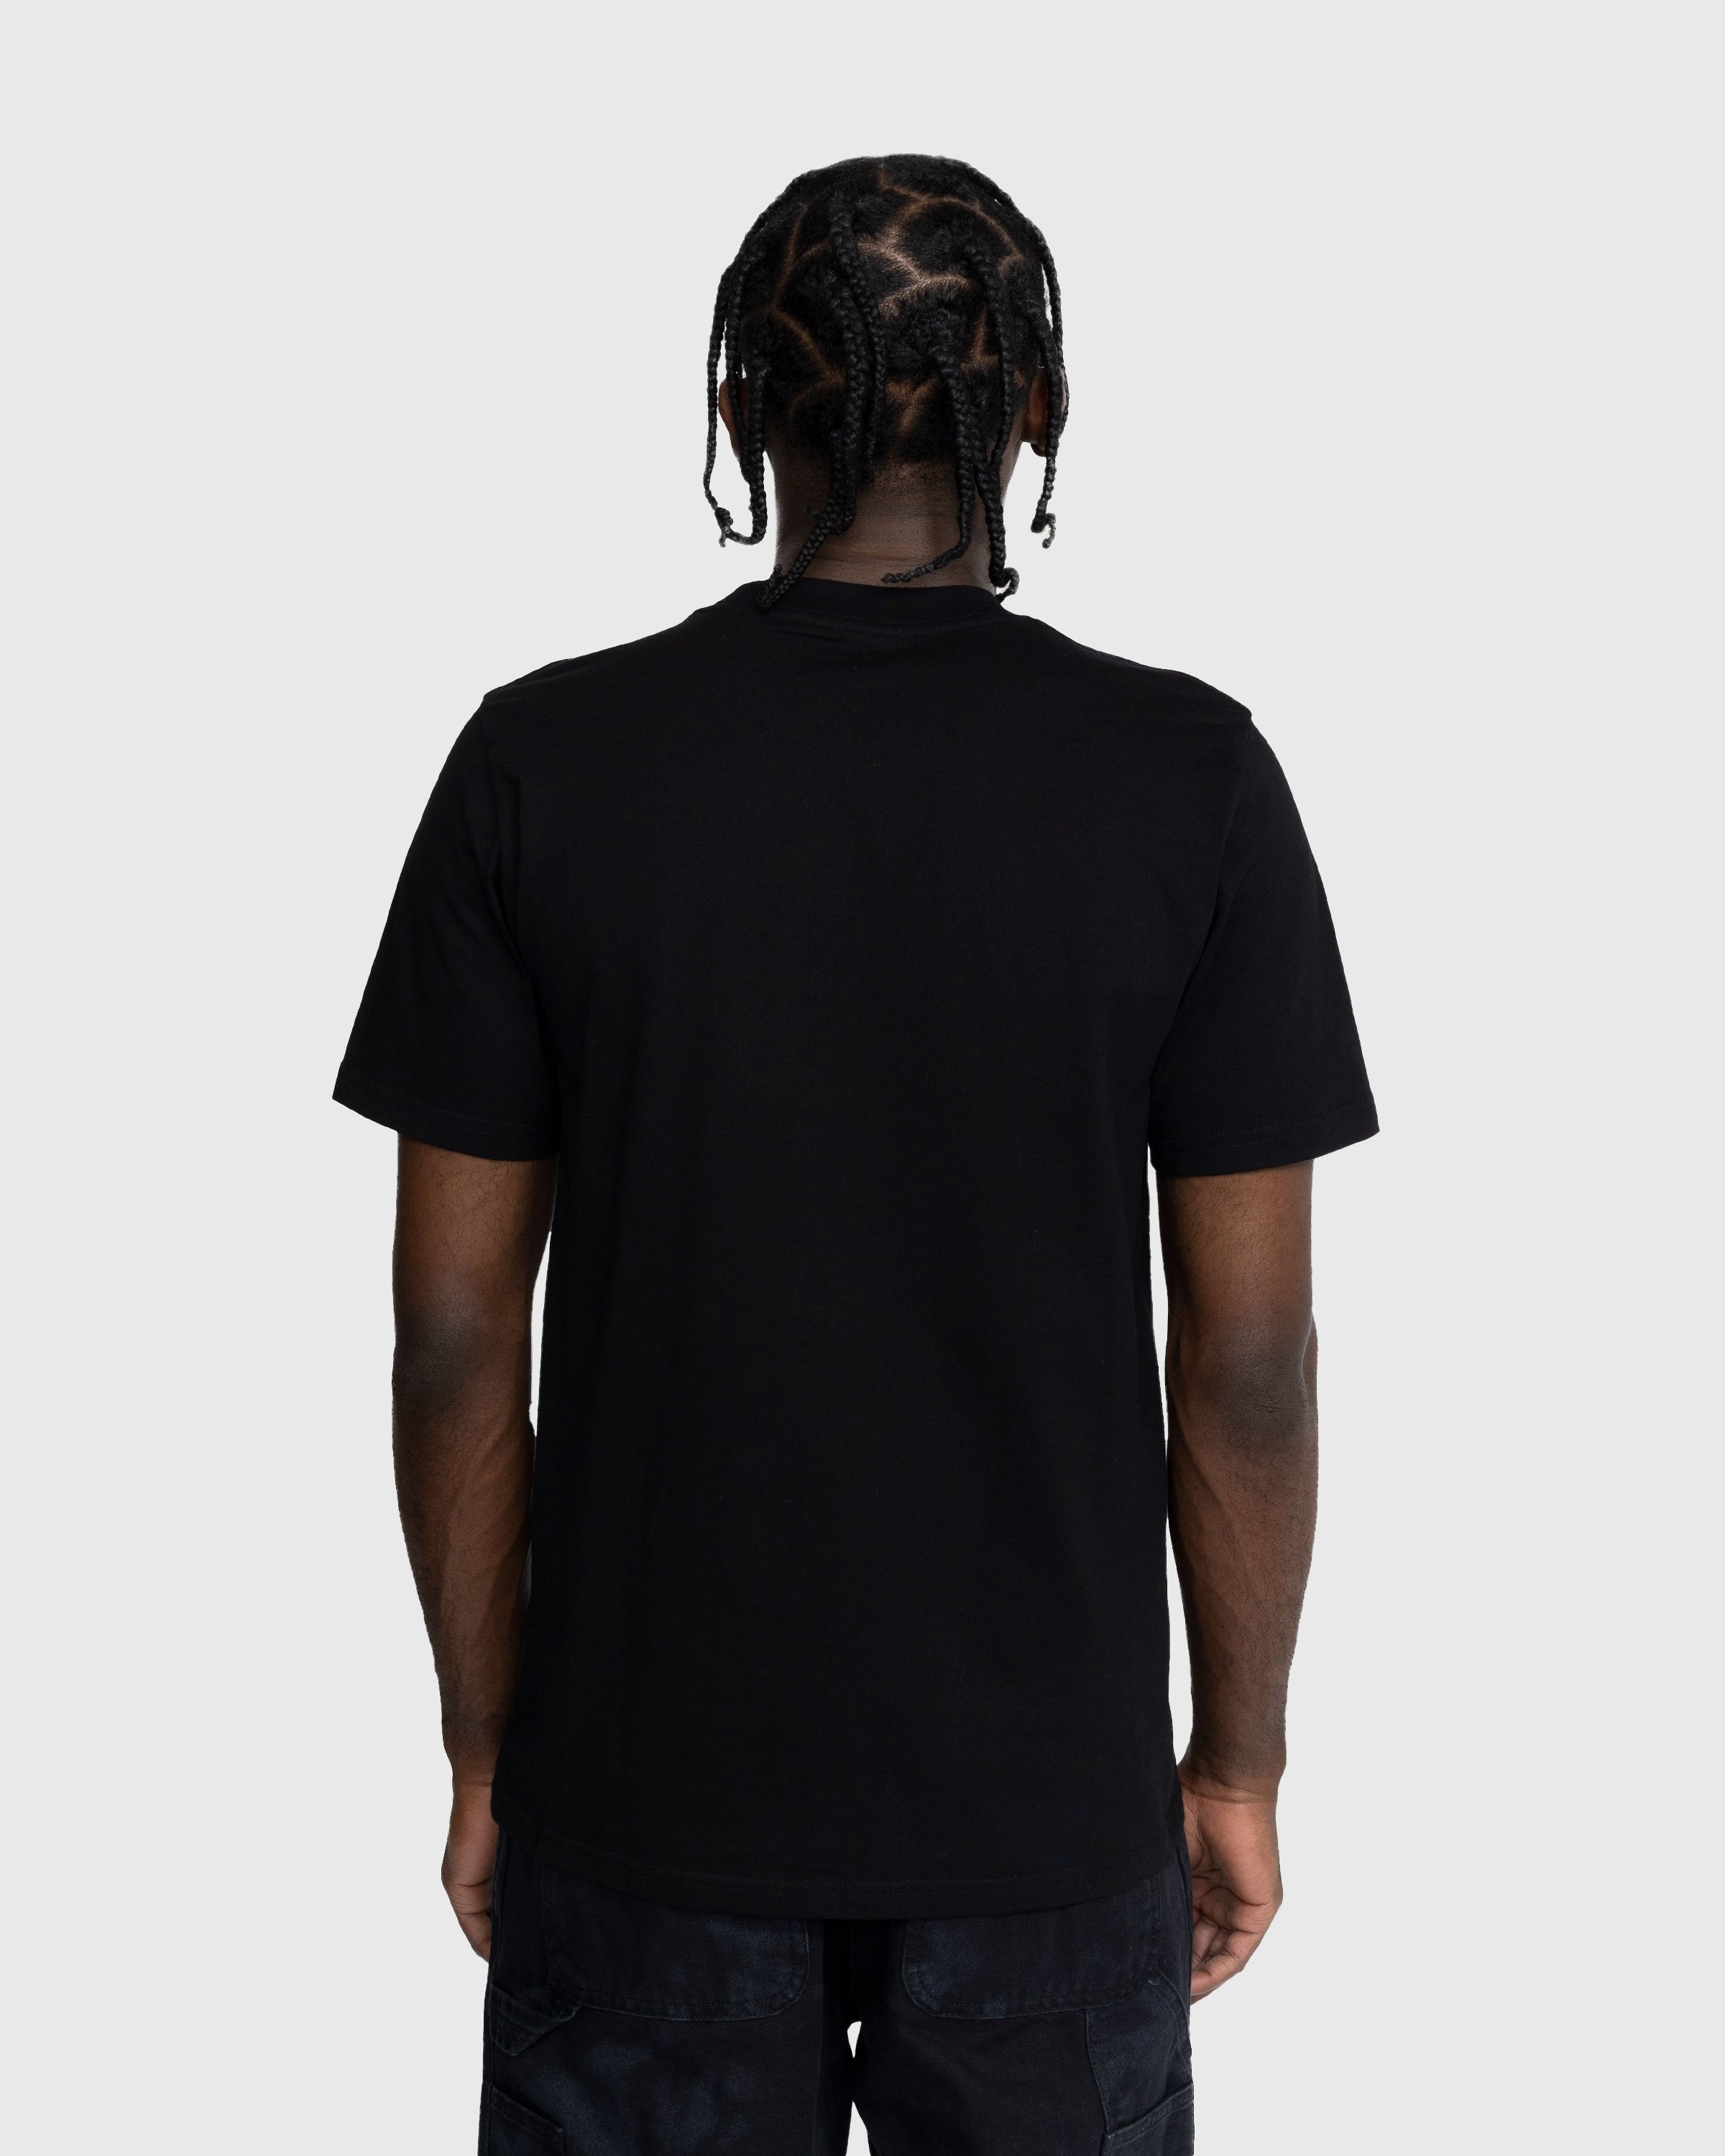 Carhartt WIP – Black Jack T-Shirt Black - Tops - Black - Image 3